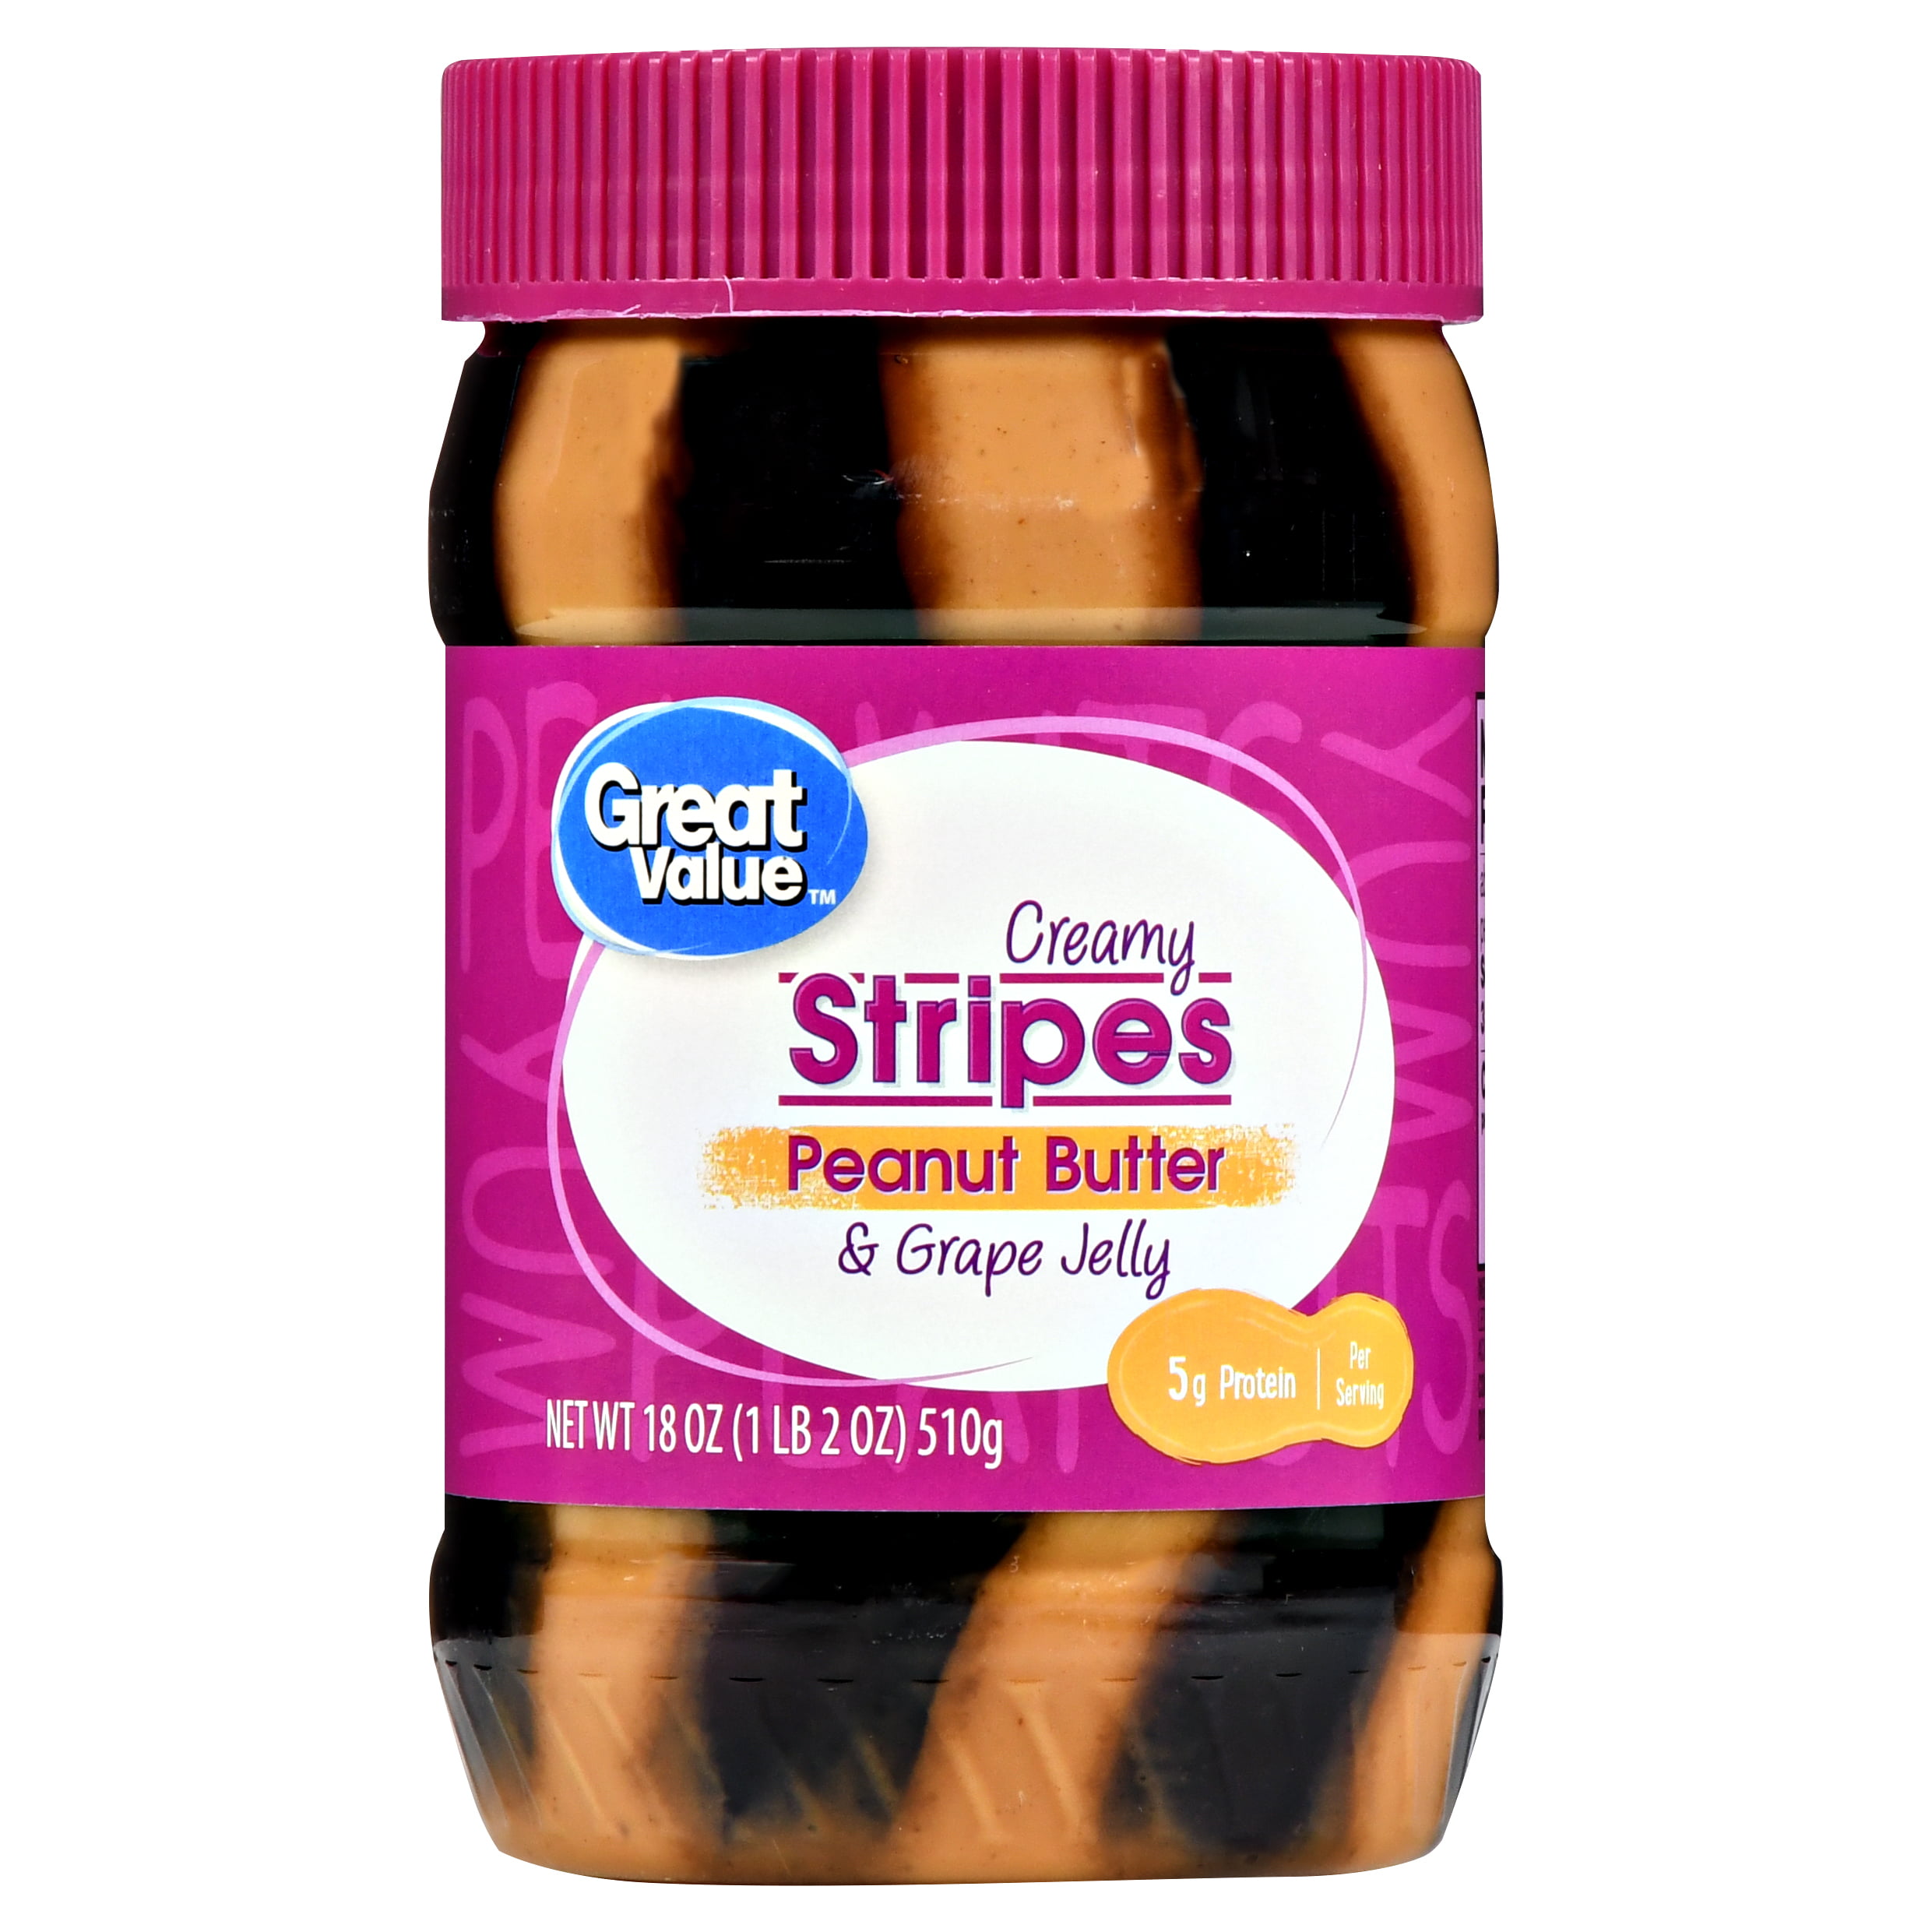 Great value паста. Great value Stripes Peanut Butter. Peanut Butter and Jelly паста. Creamy Stripes джем. Peanut jelly